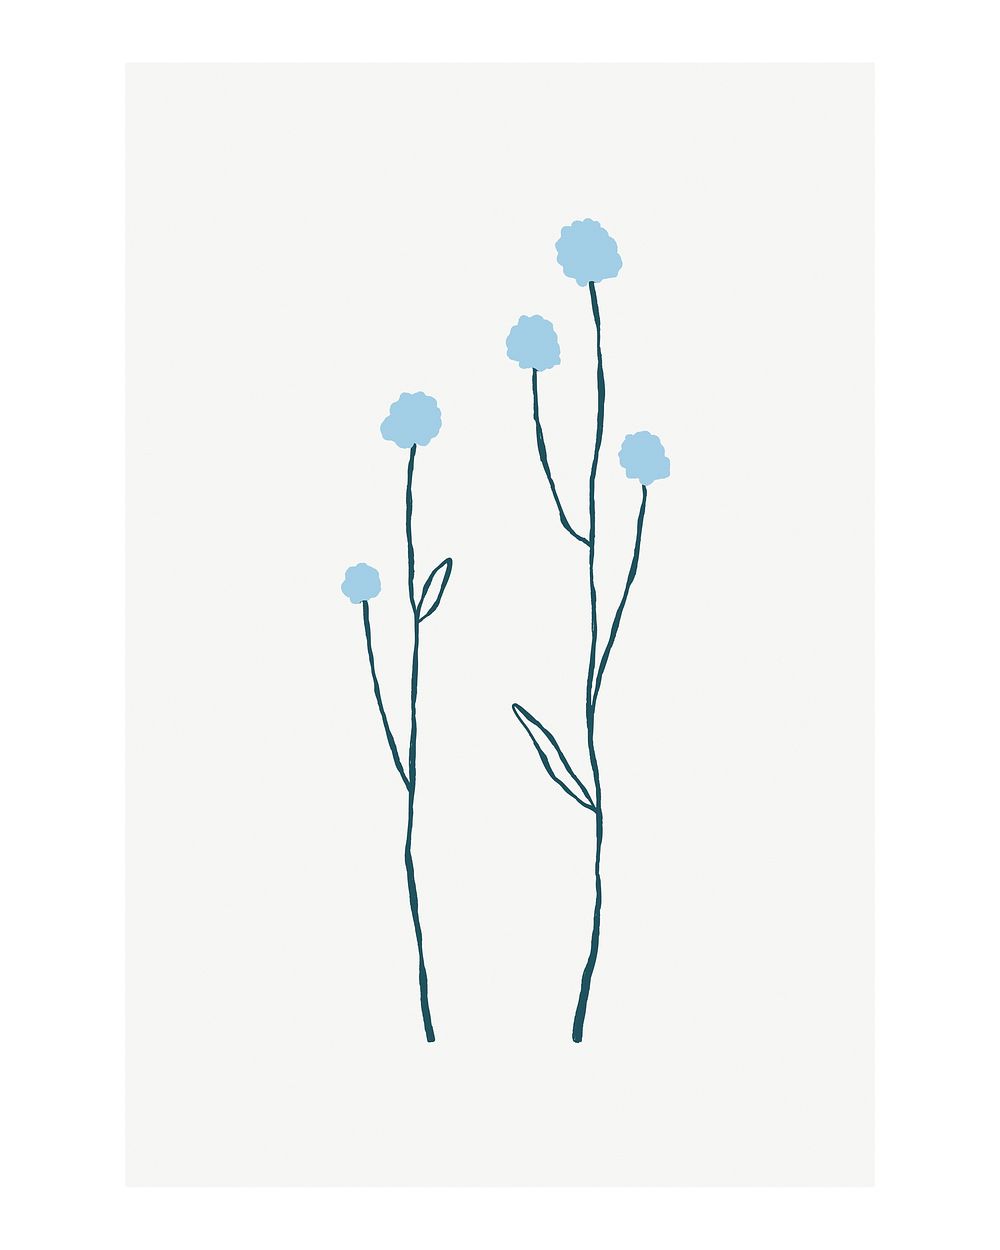 Flower doodle poster, minimal hand drawn illustration